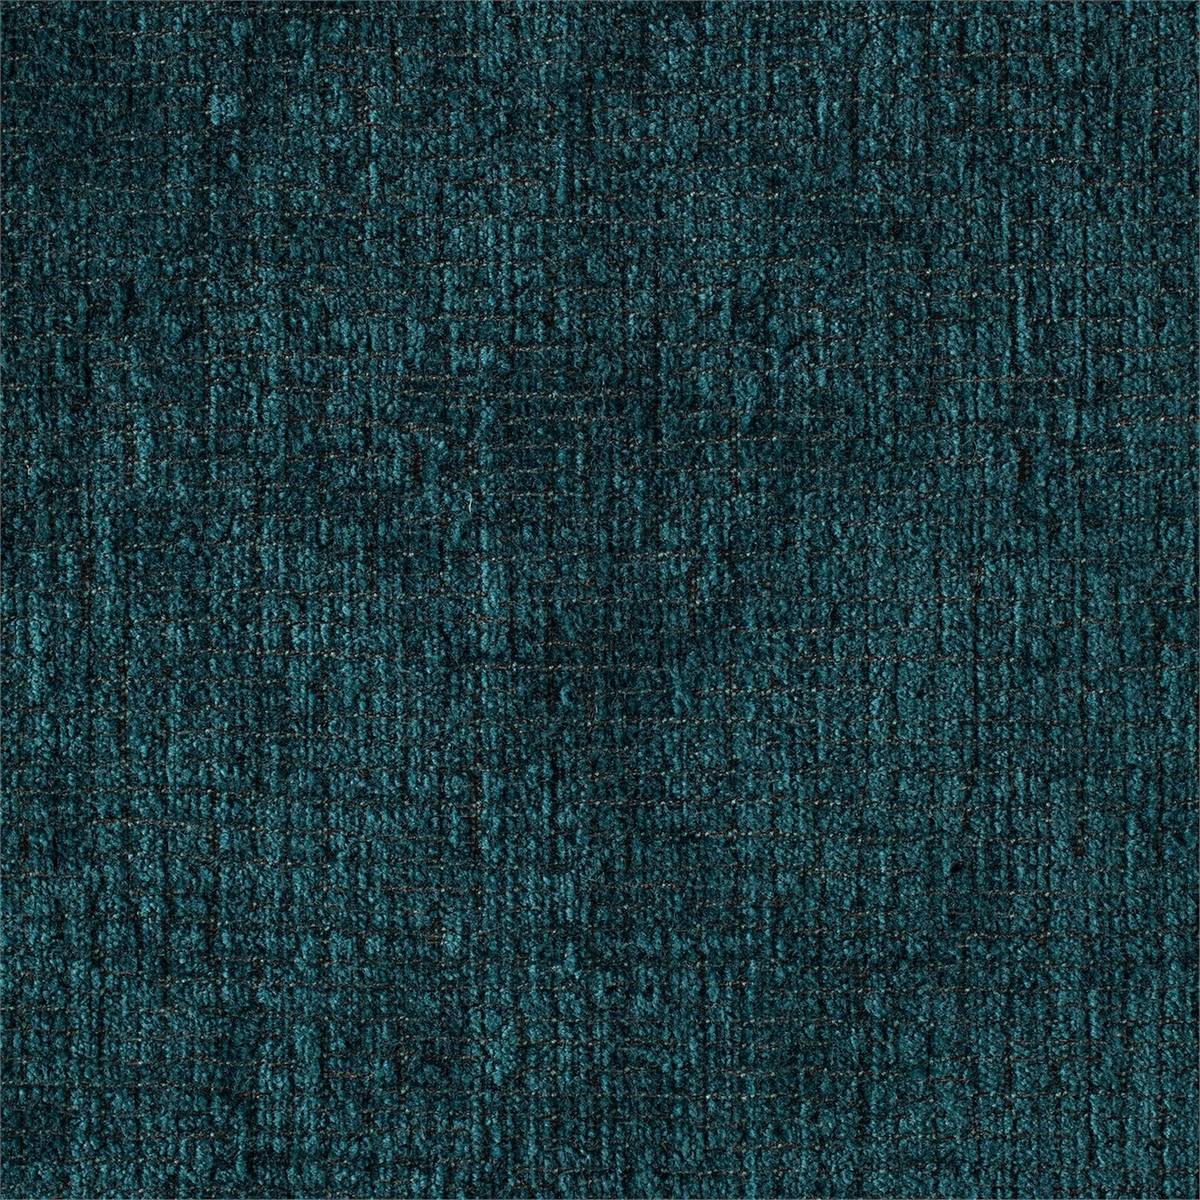 Tessella Teal Fabric by Sanderson